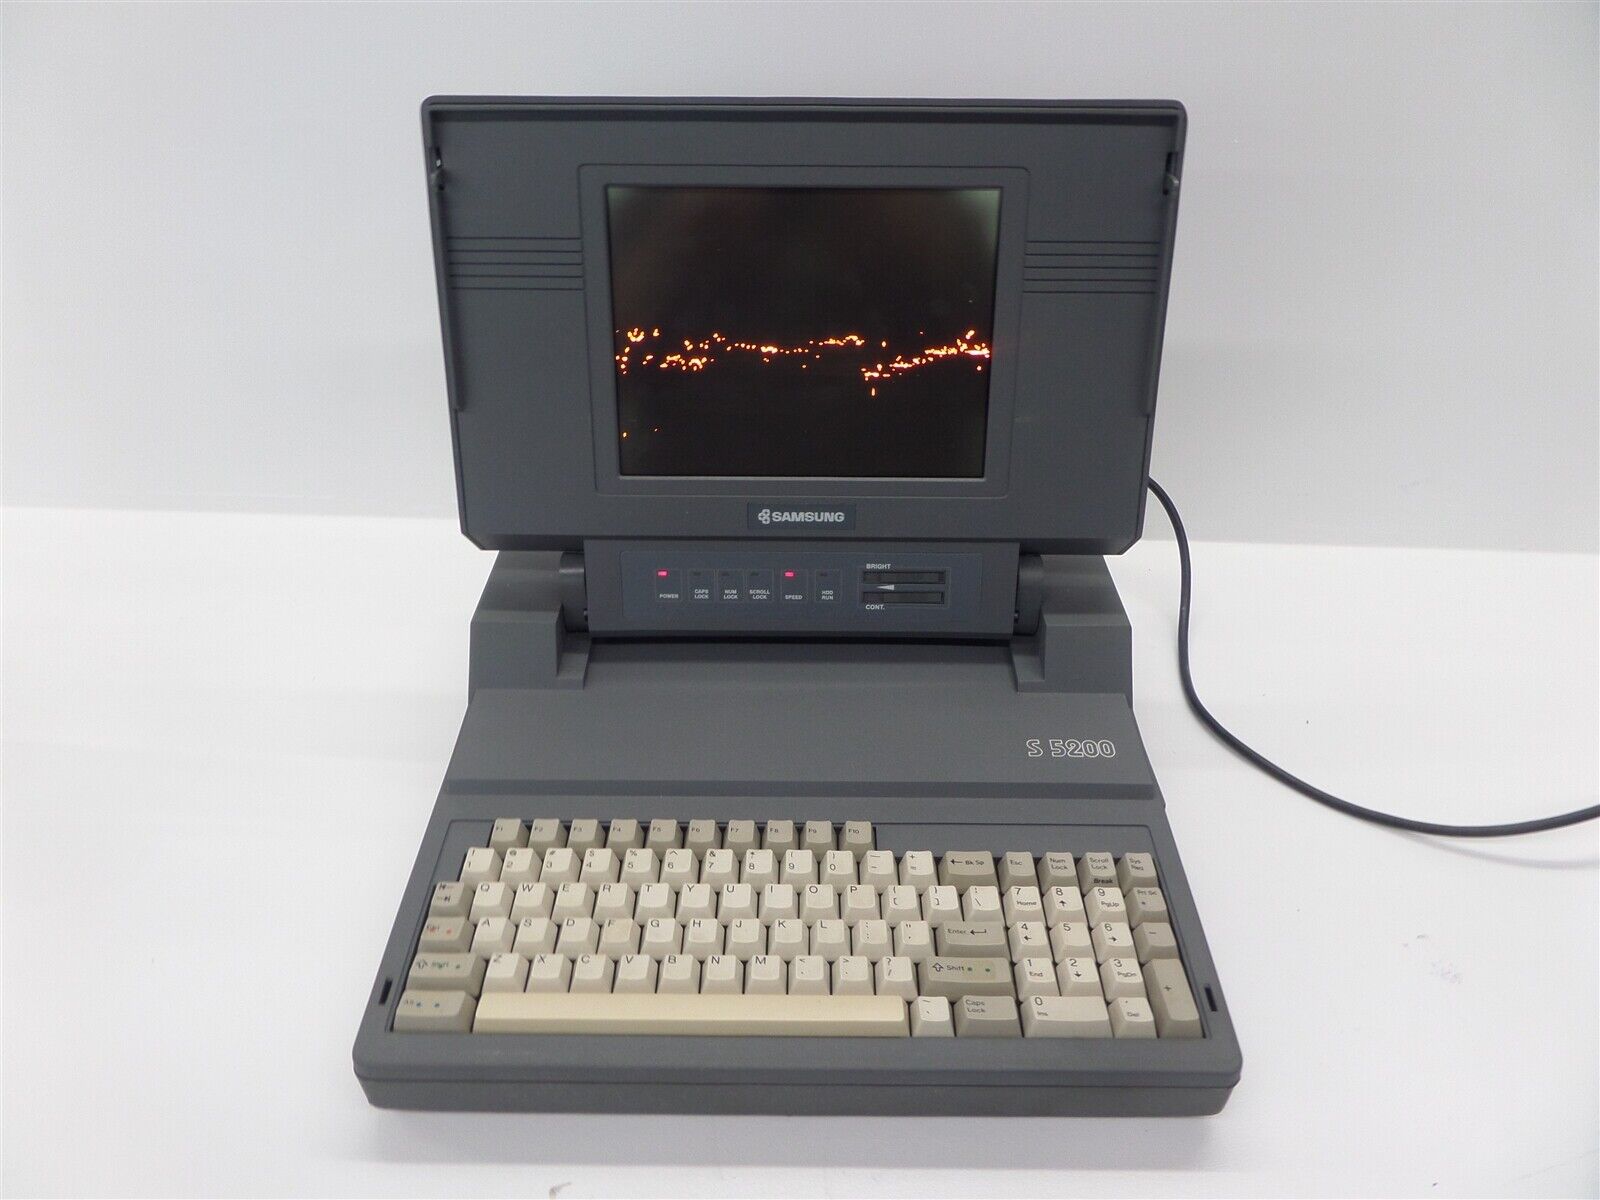 Vintage Samsung S-5200 Laptop Computer - Broken Hinges, Display Issue